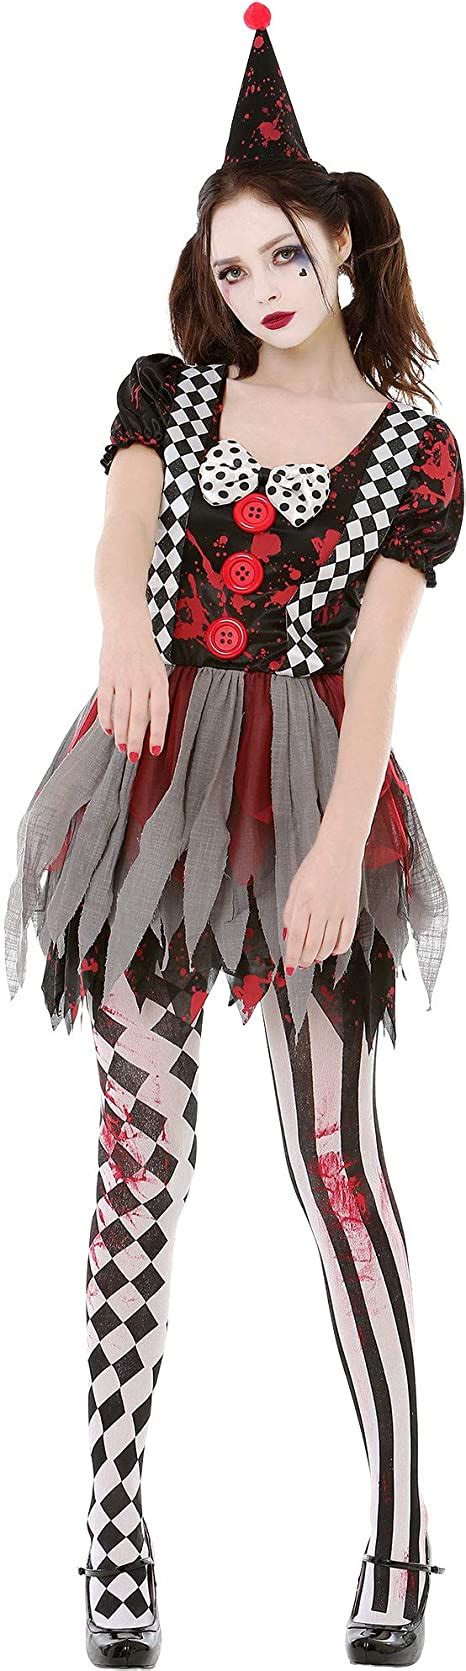 Crazy Clown Halloween Costume Creepy Circus Girl Dress For Women